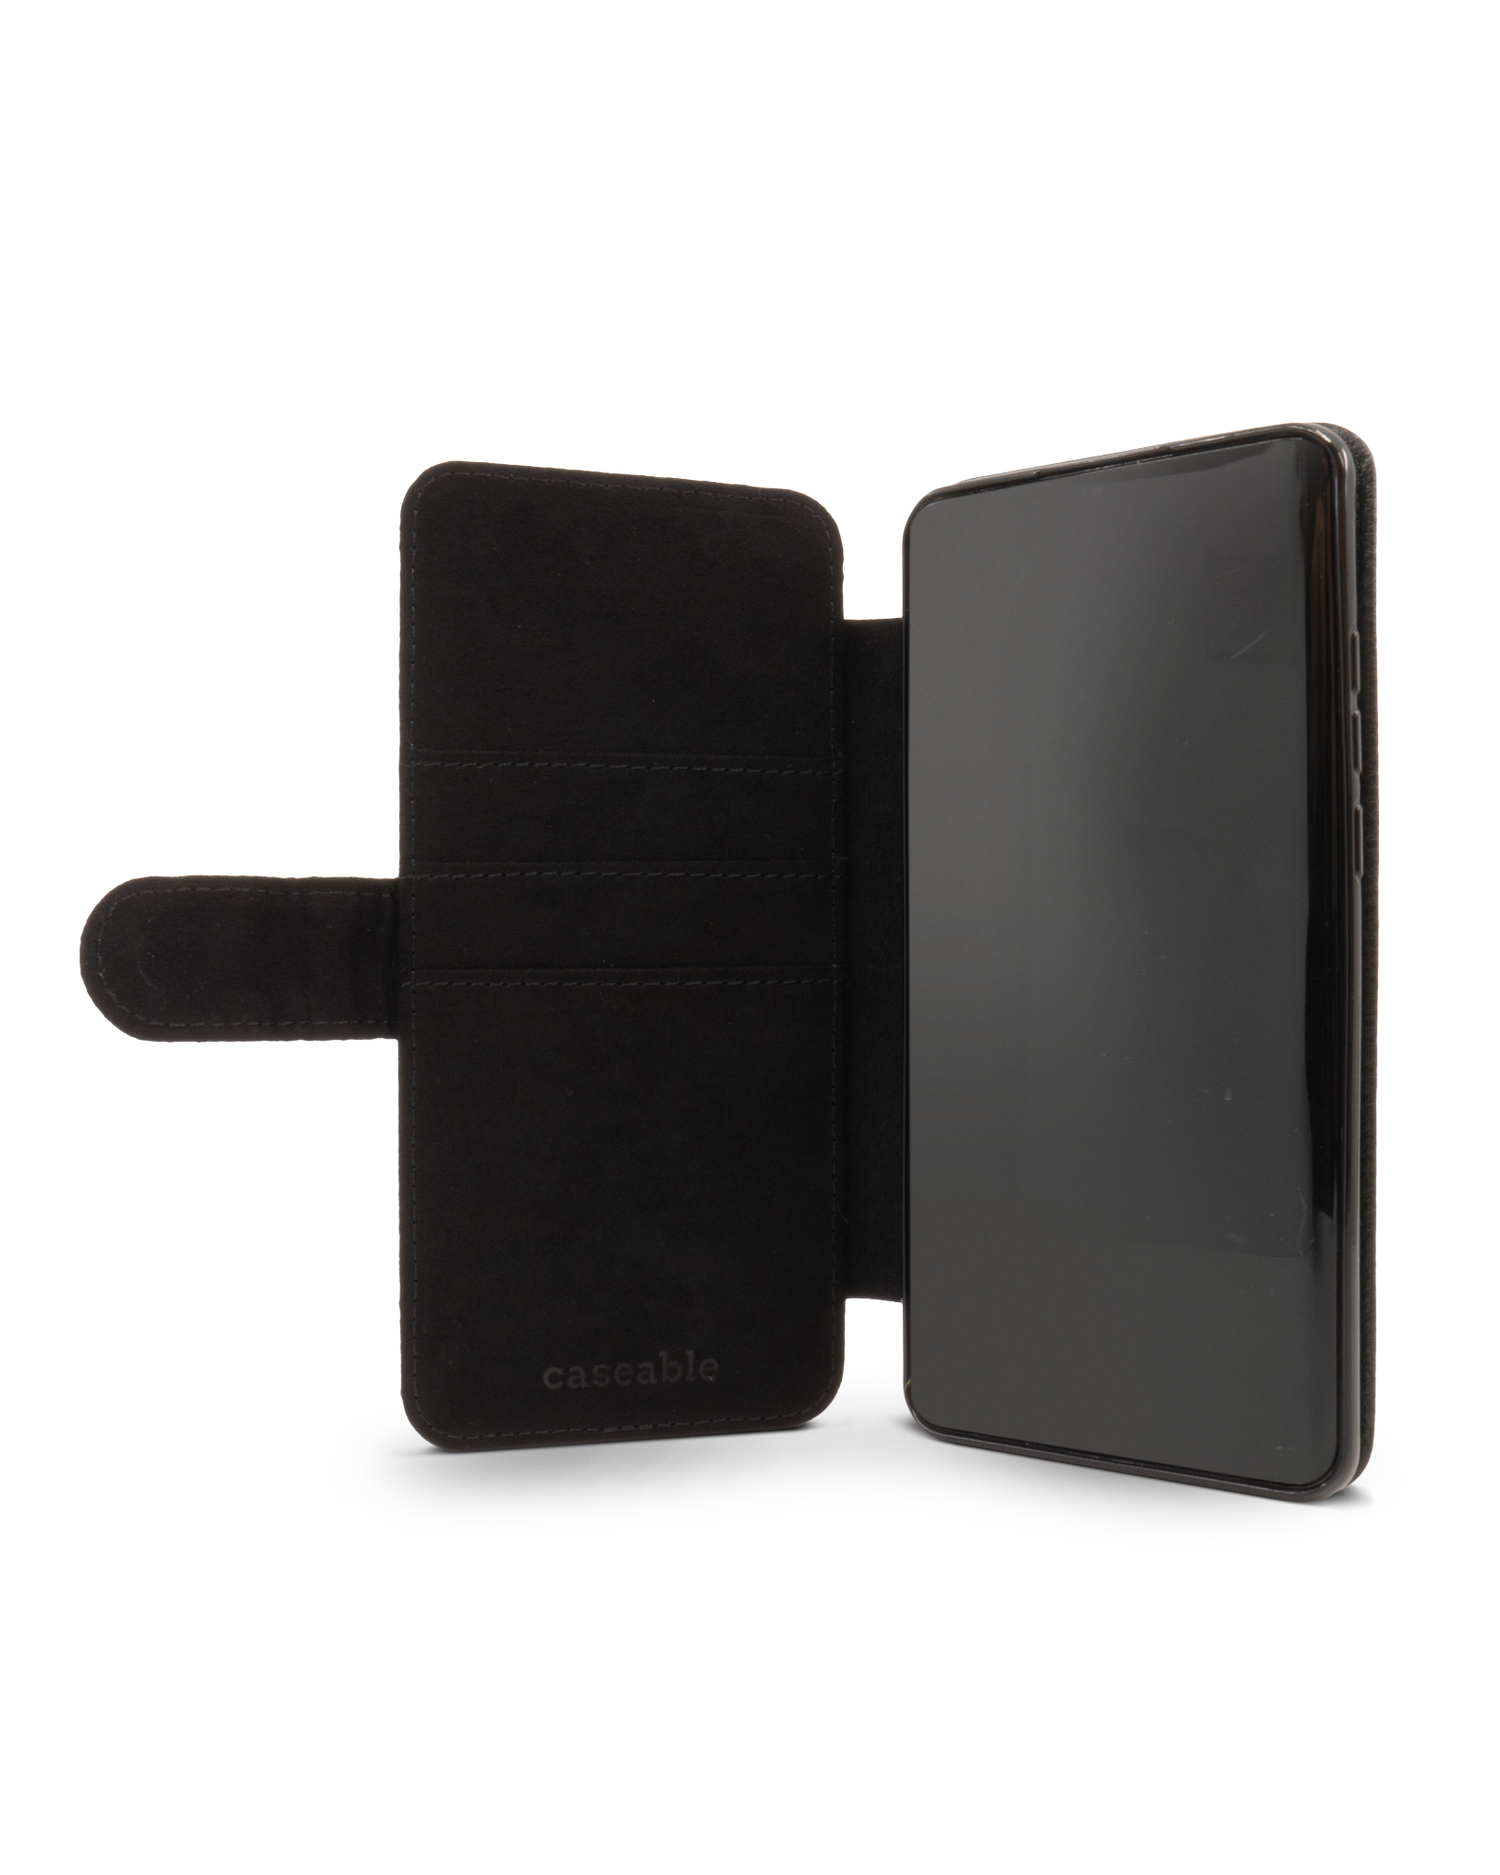 Grids Wallet Phone Case Huawei P30 Pro: Inside View